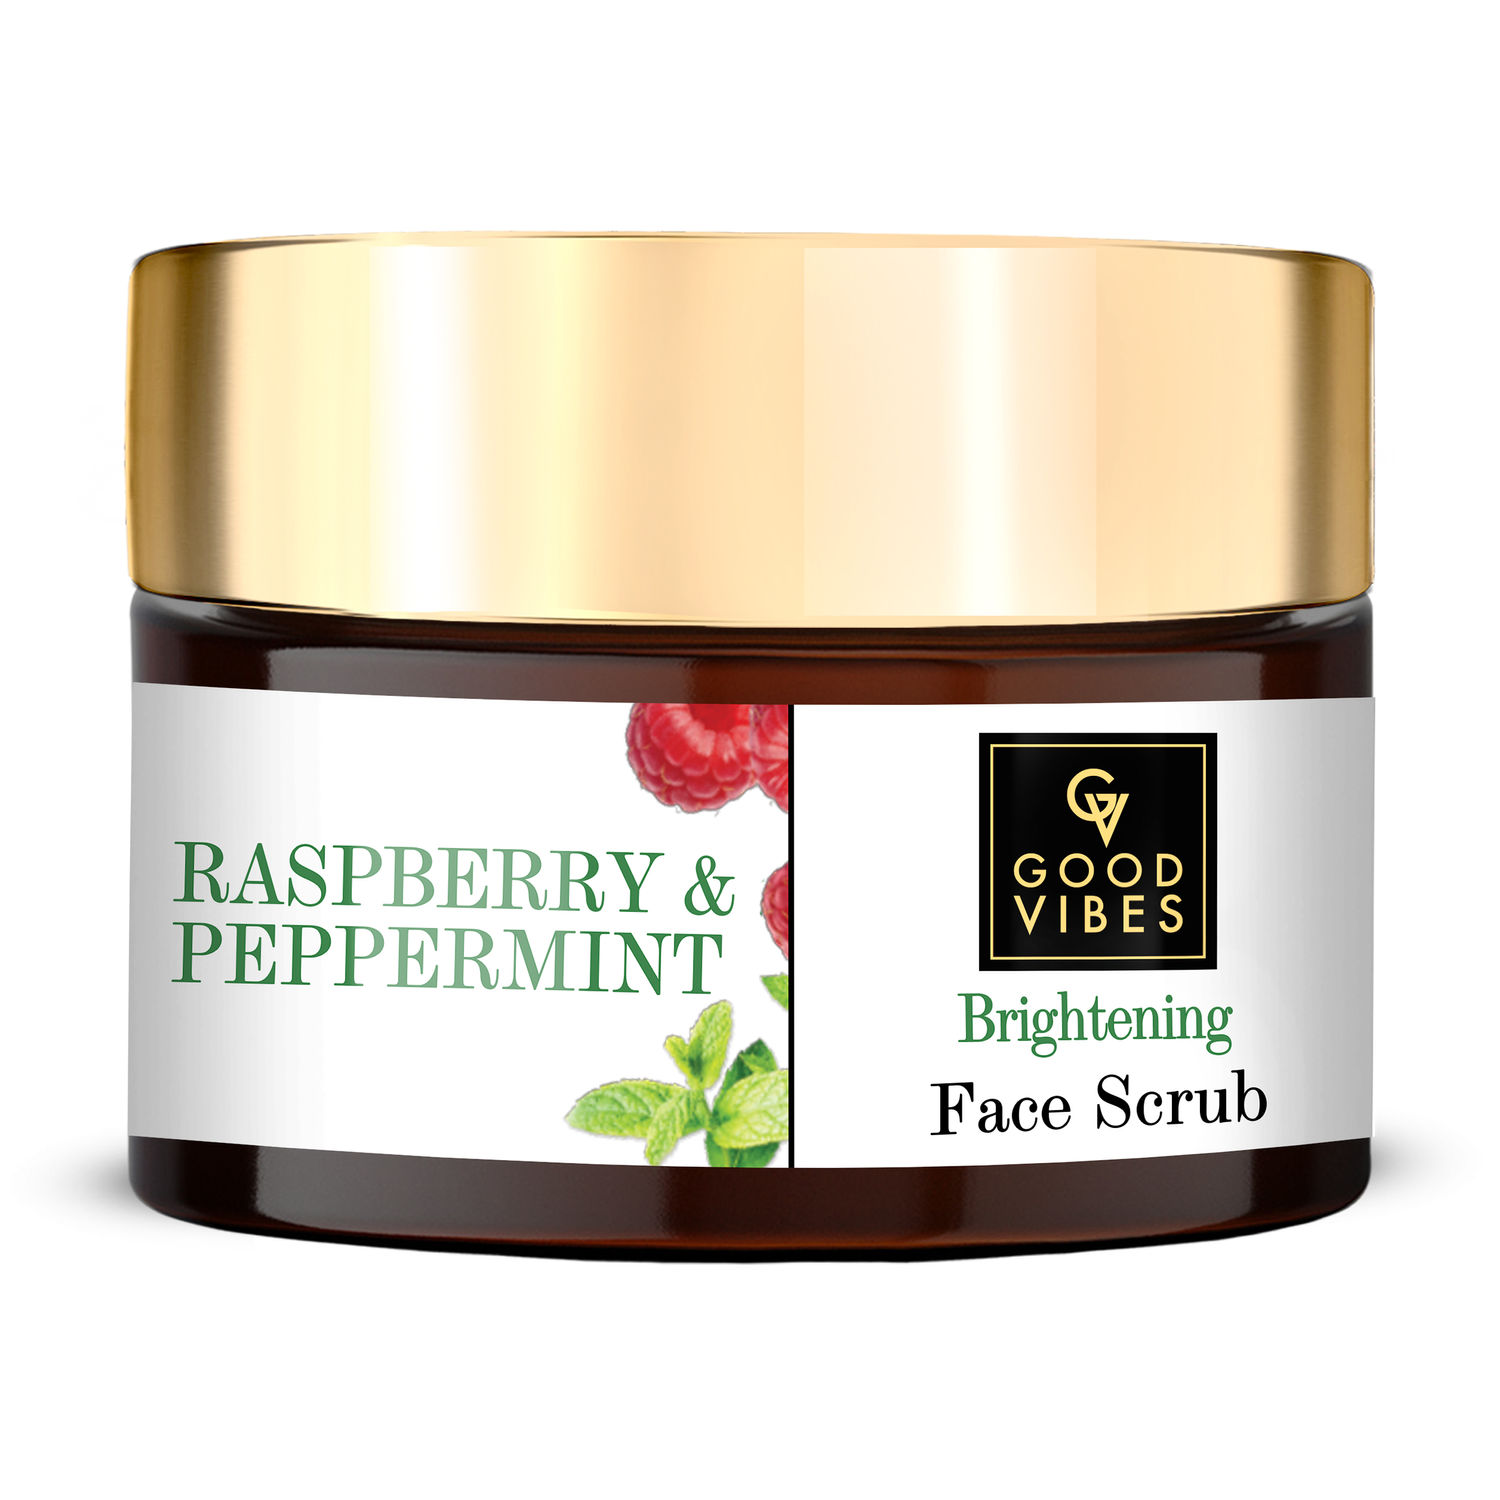 Good Vibes Brightening Face Scrub - Raspberry & Peppermint (50 g)